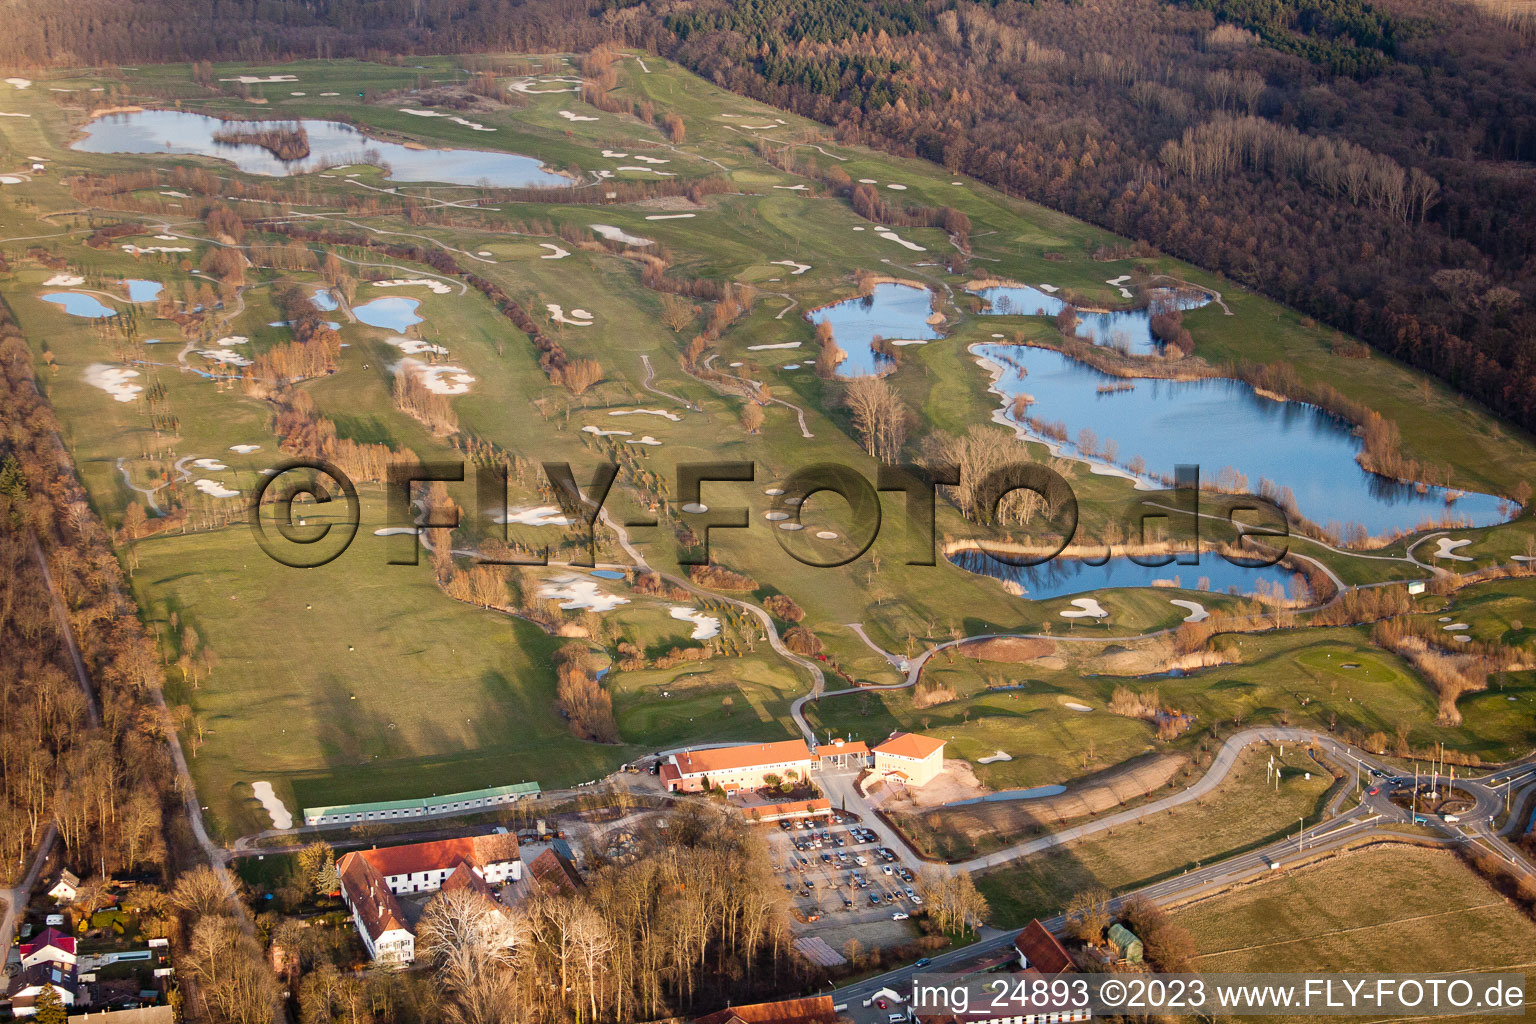 Golf Club Landgut Dreihof SÜW in Essingen in the state Rhineland-Palatinate, Germany viewn from the air